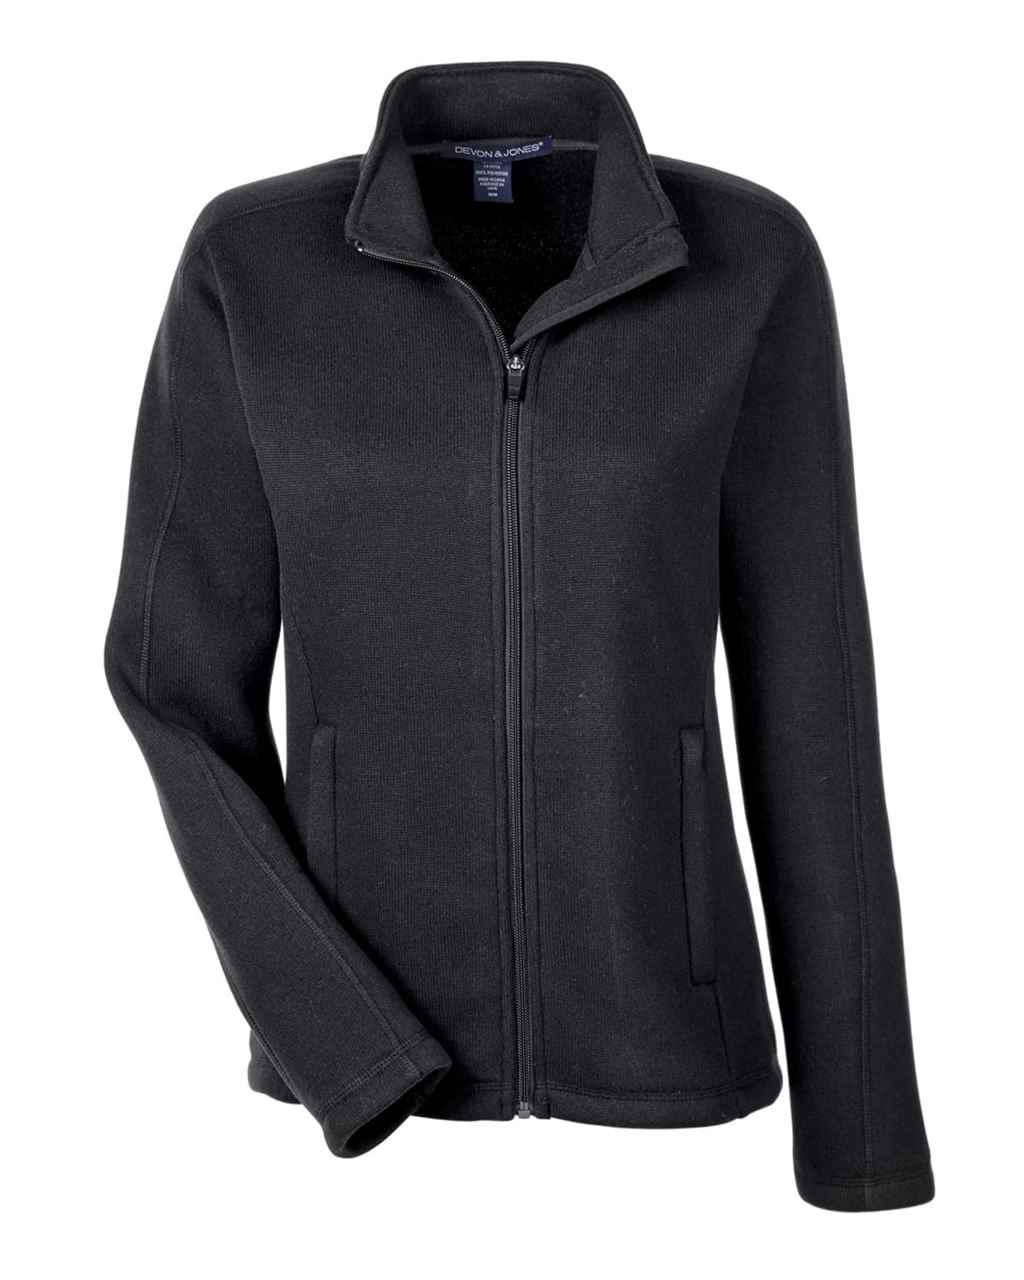 Spyder Custom Jackets and Outerwear Apparel – Corporate Gear